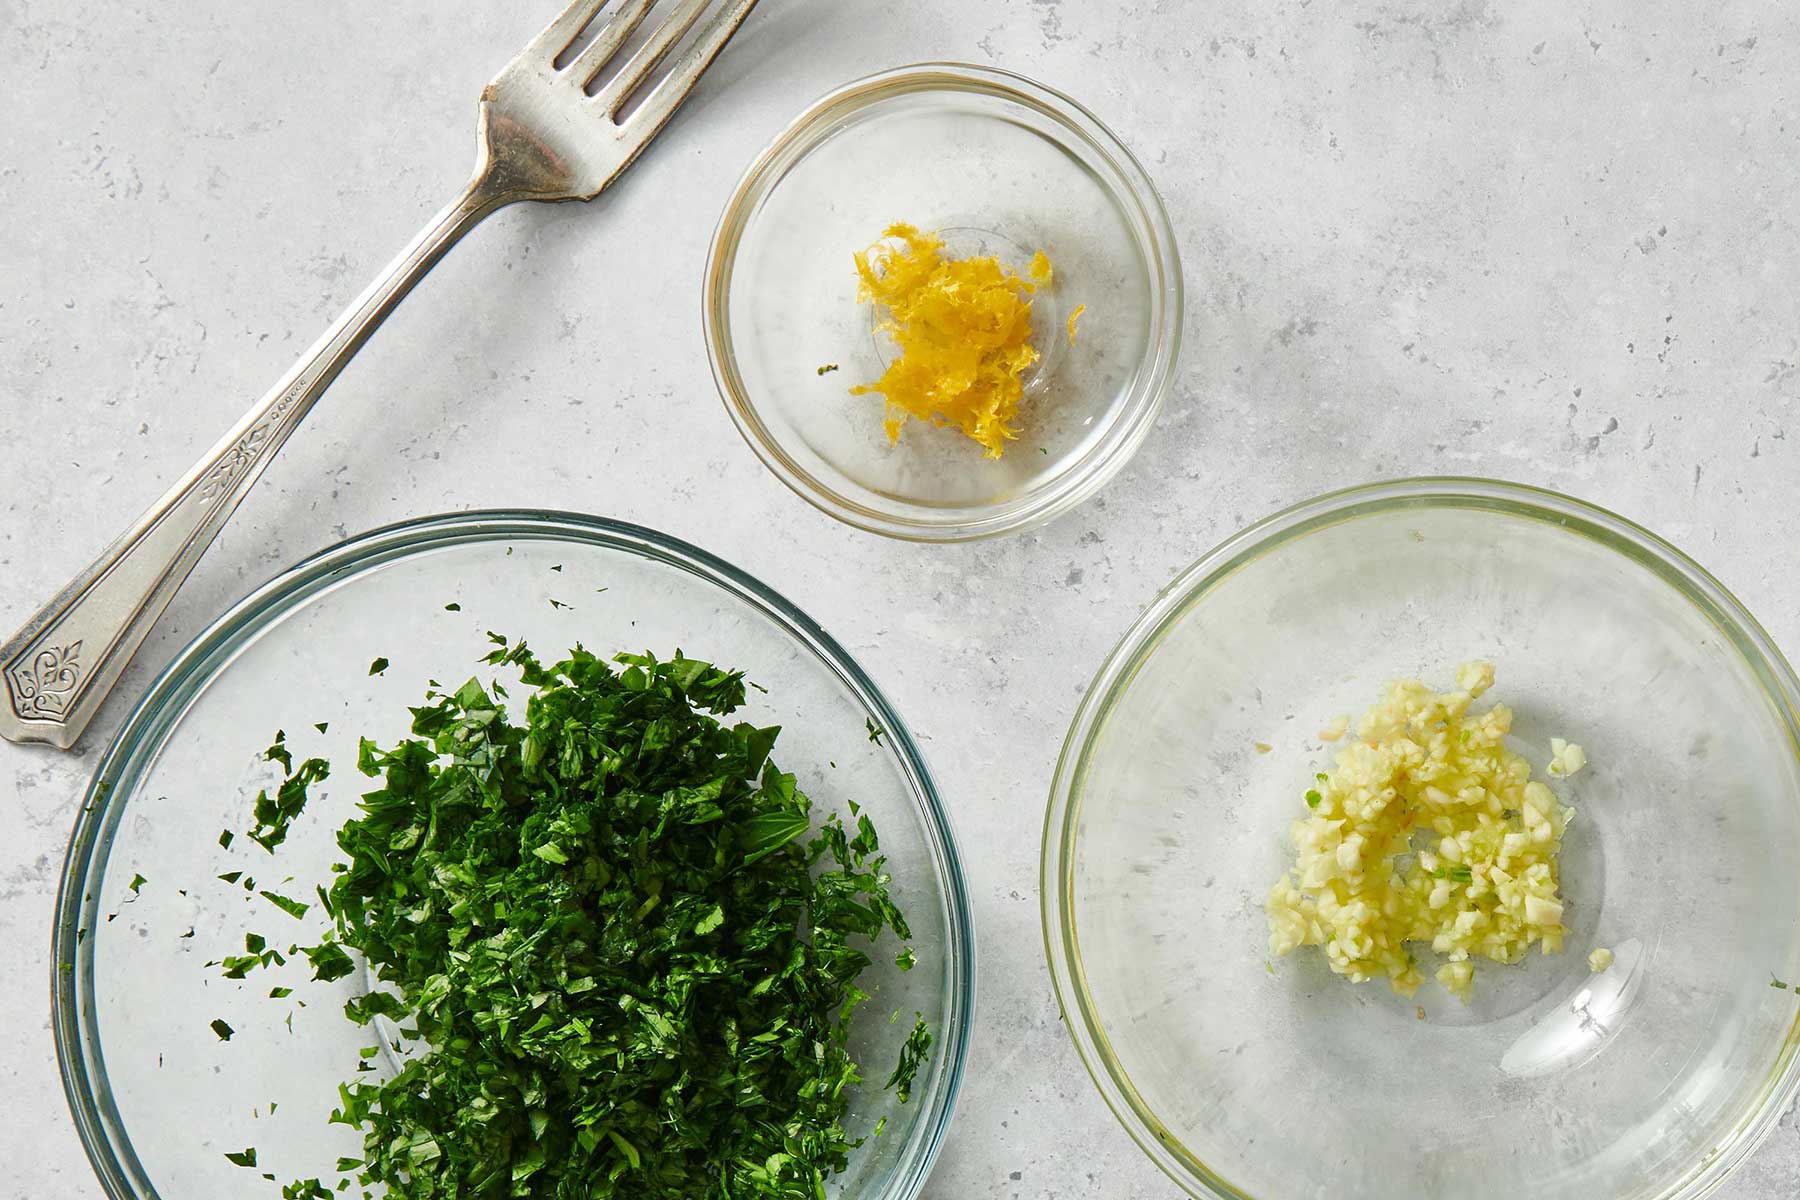 Glass bowls of parsley, lemon zest, and chopped garlic.